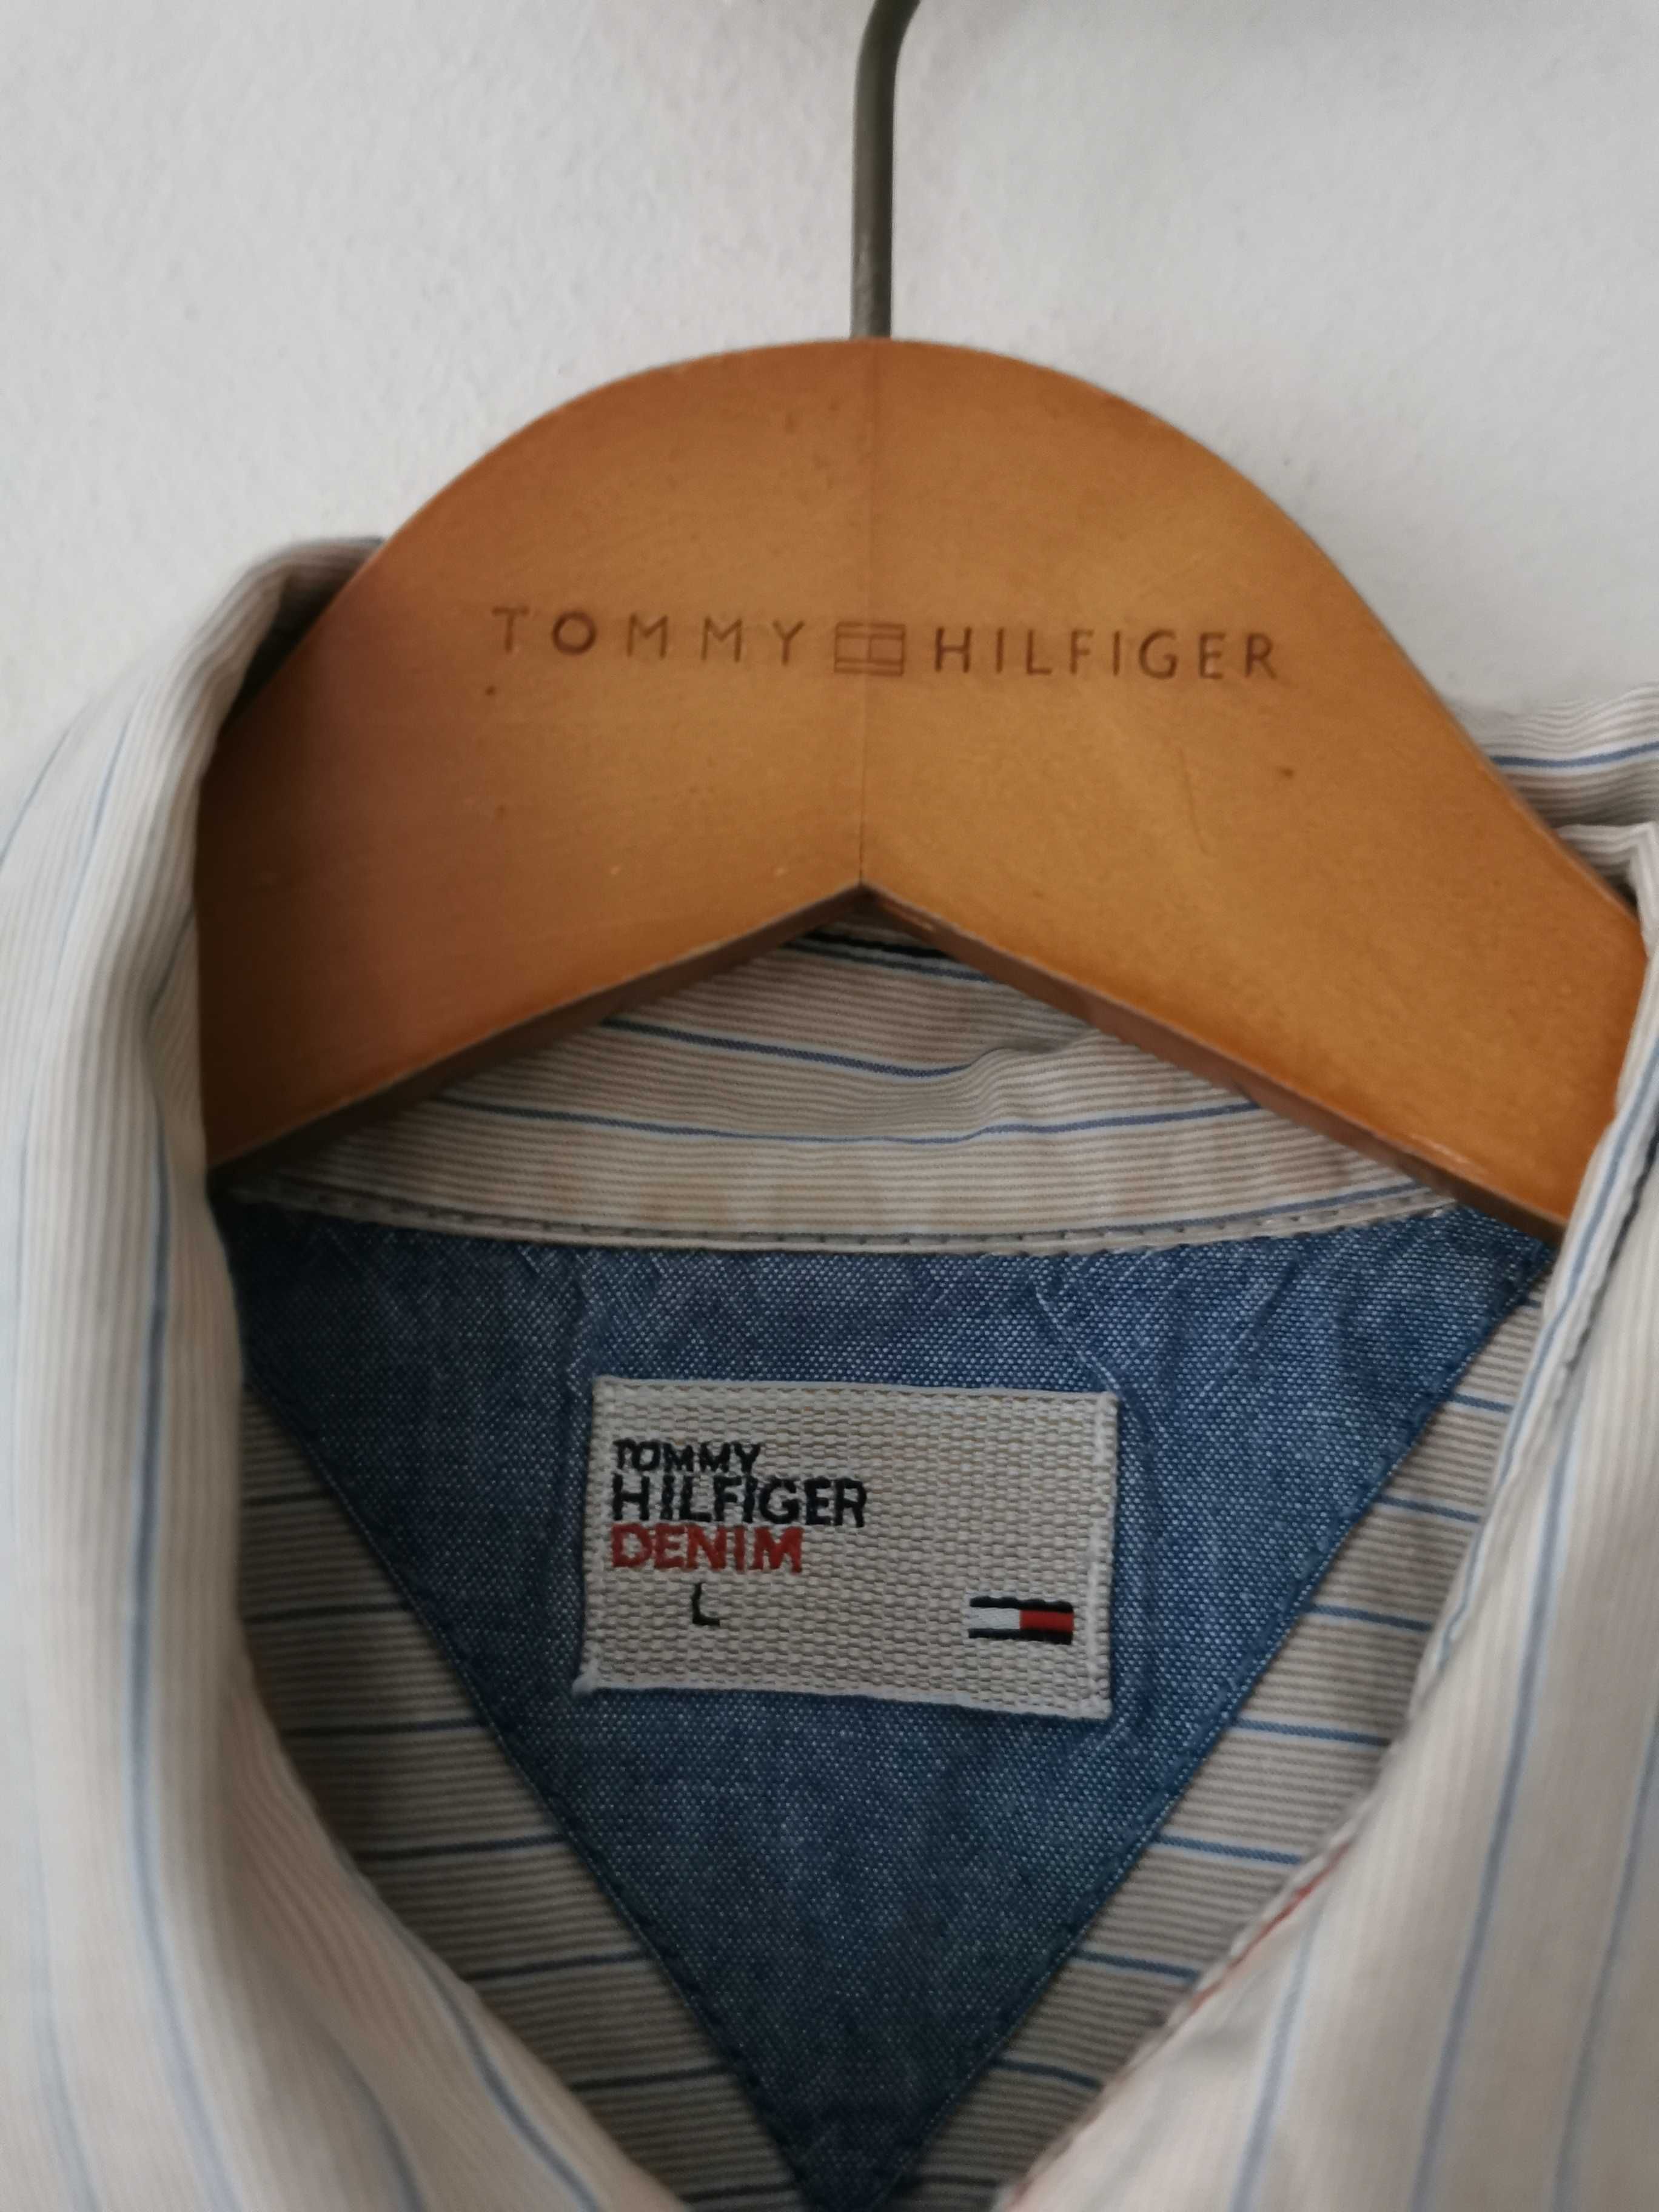 Tommy Hilfiger Denim koszula męska logowana bawełna IDEAŁ L